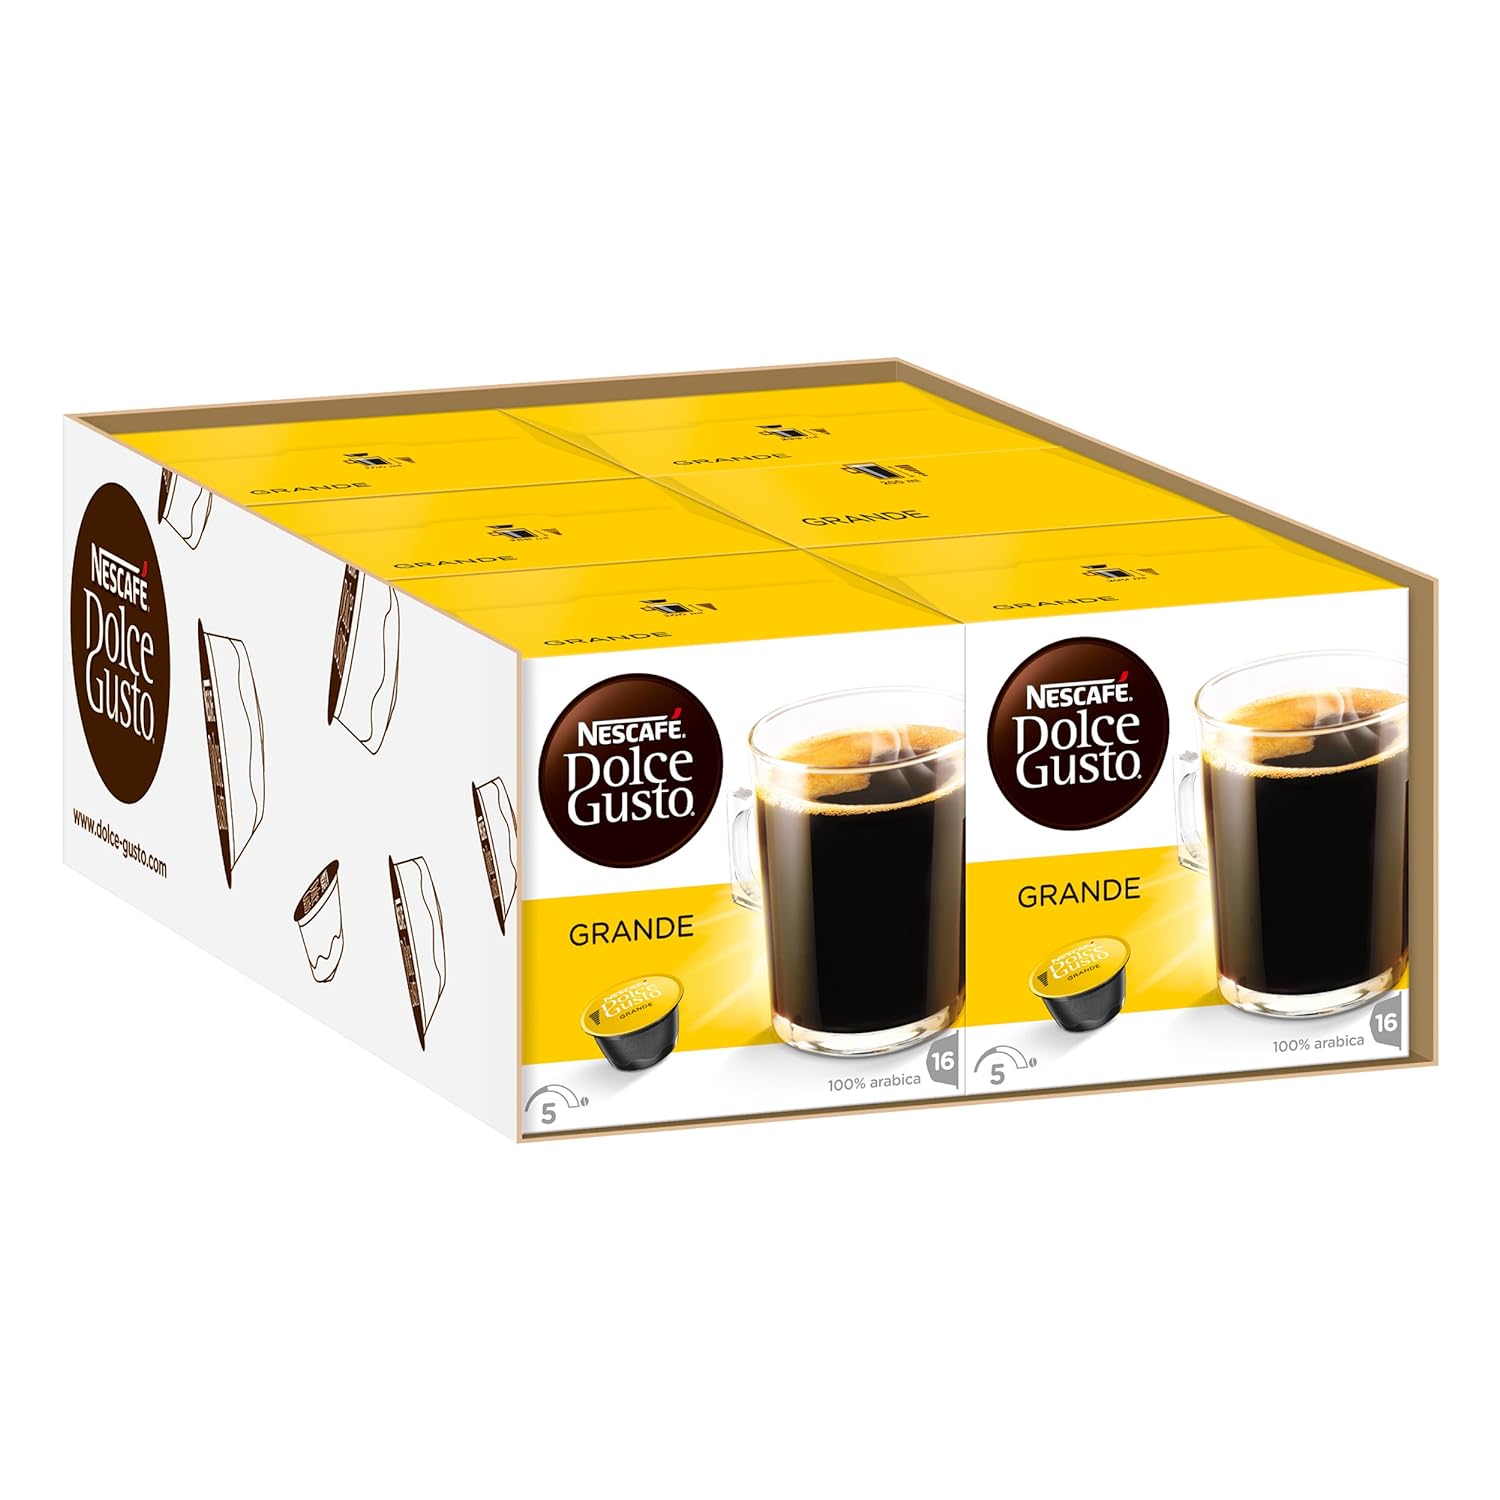 Nescafé Dolce Gusto Grande, coffee, coffee capsule, pack of 6, 6 x 16 capsules